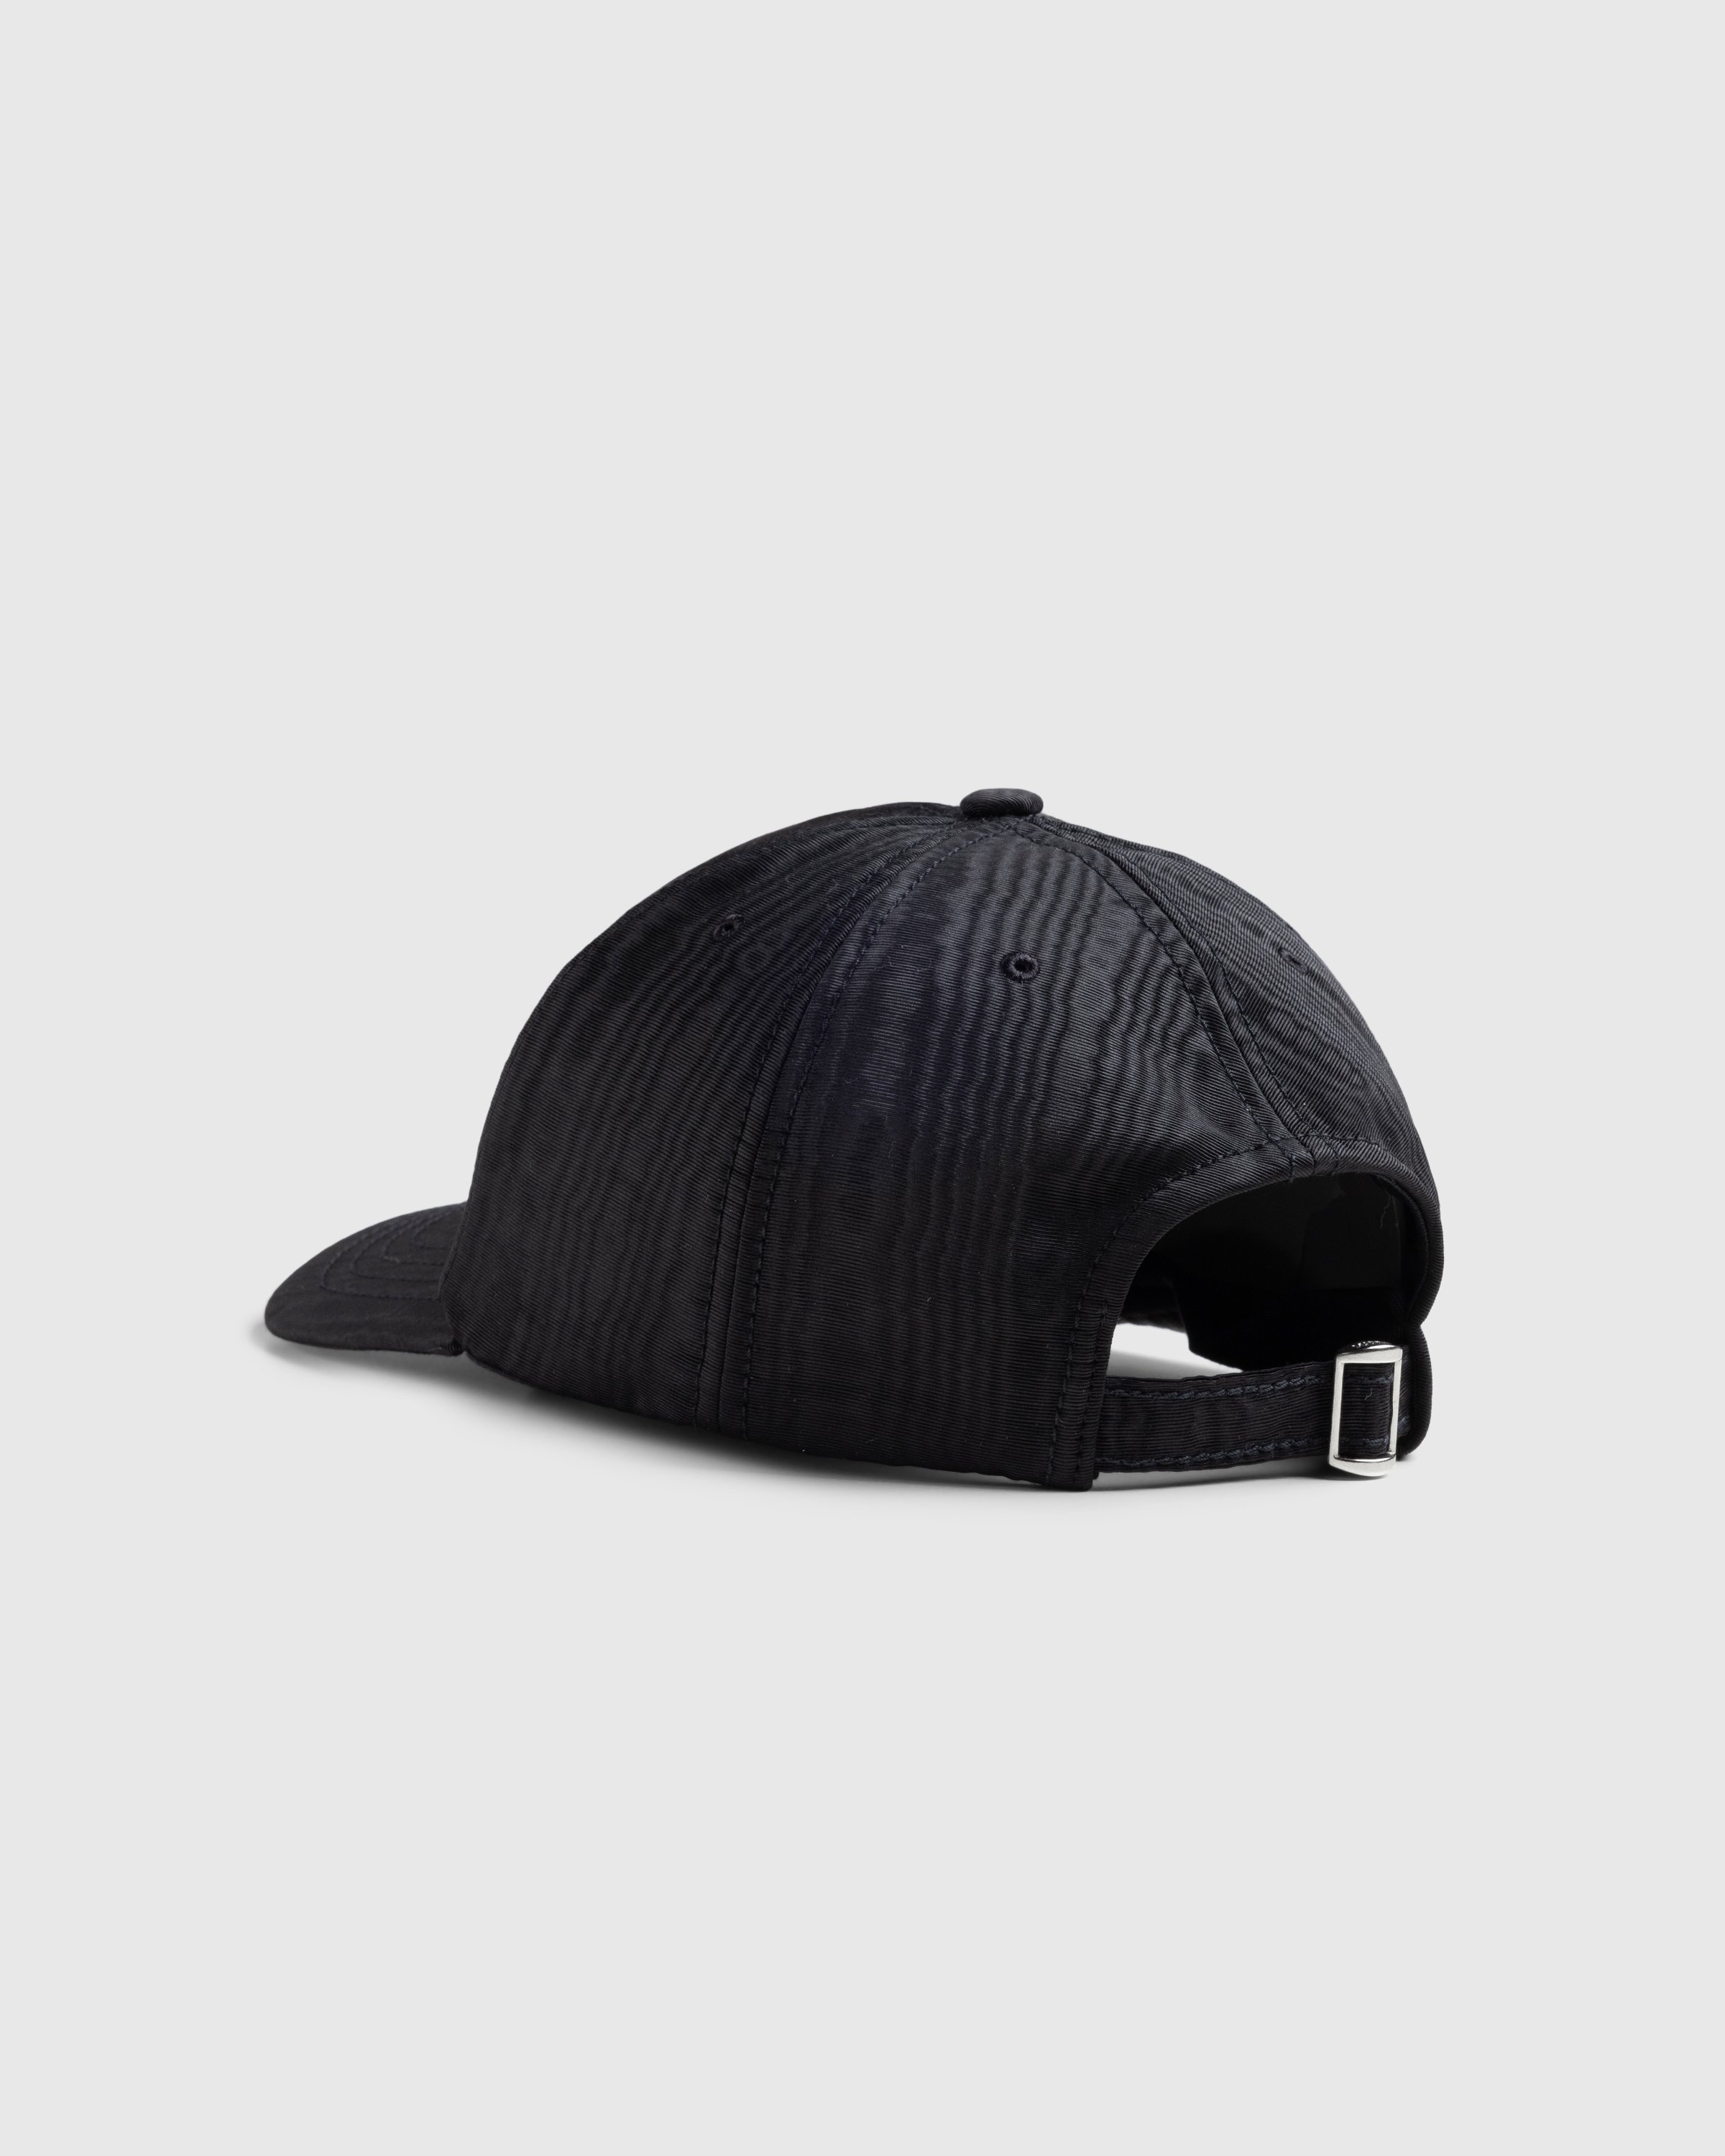 Marine Serre – Embroidered Regenerated Moire Cap Black - Hats - Black - Image 3